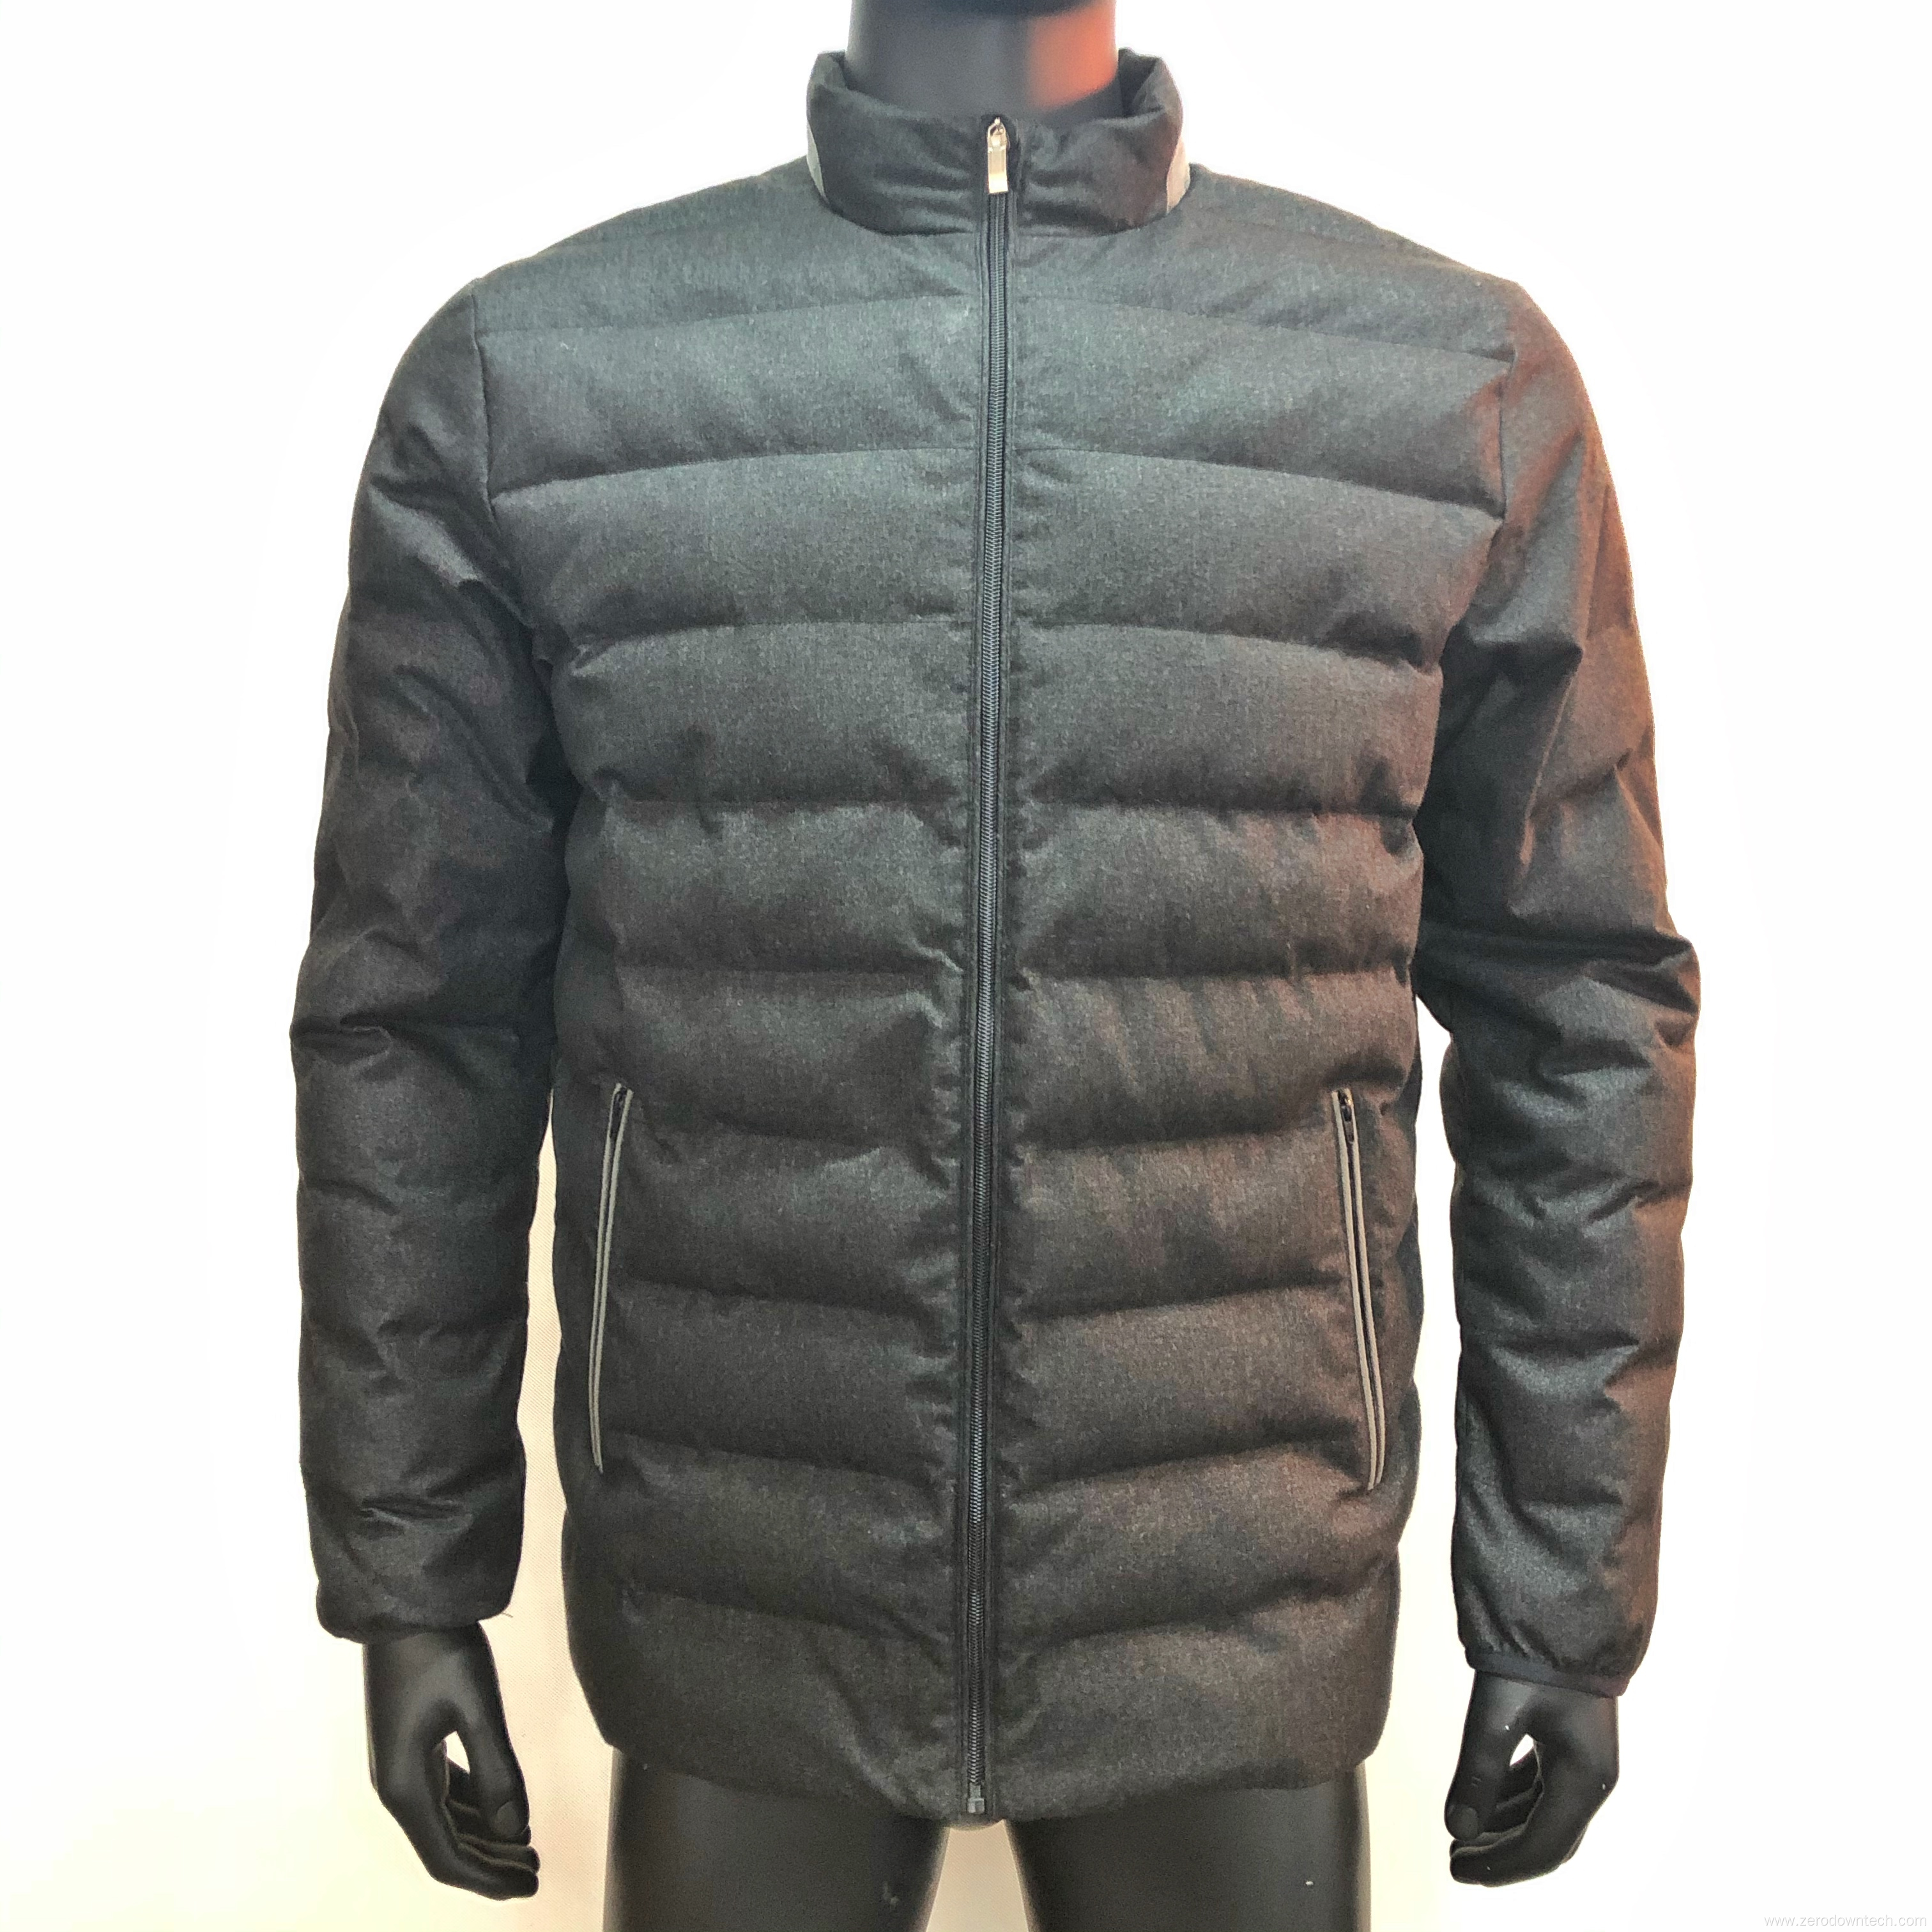 Windproof Winter Padding Jacket